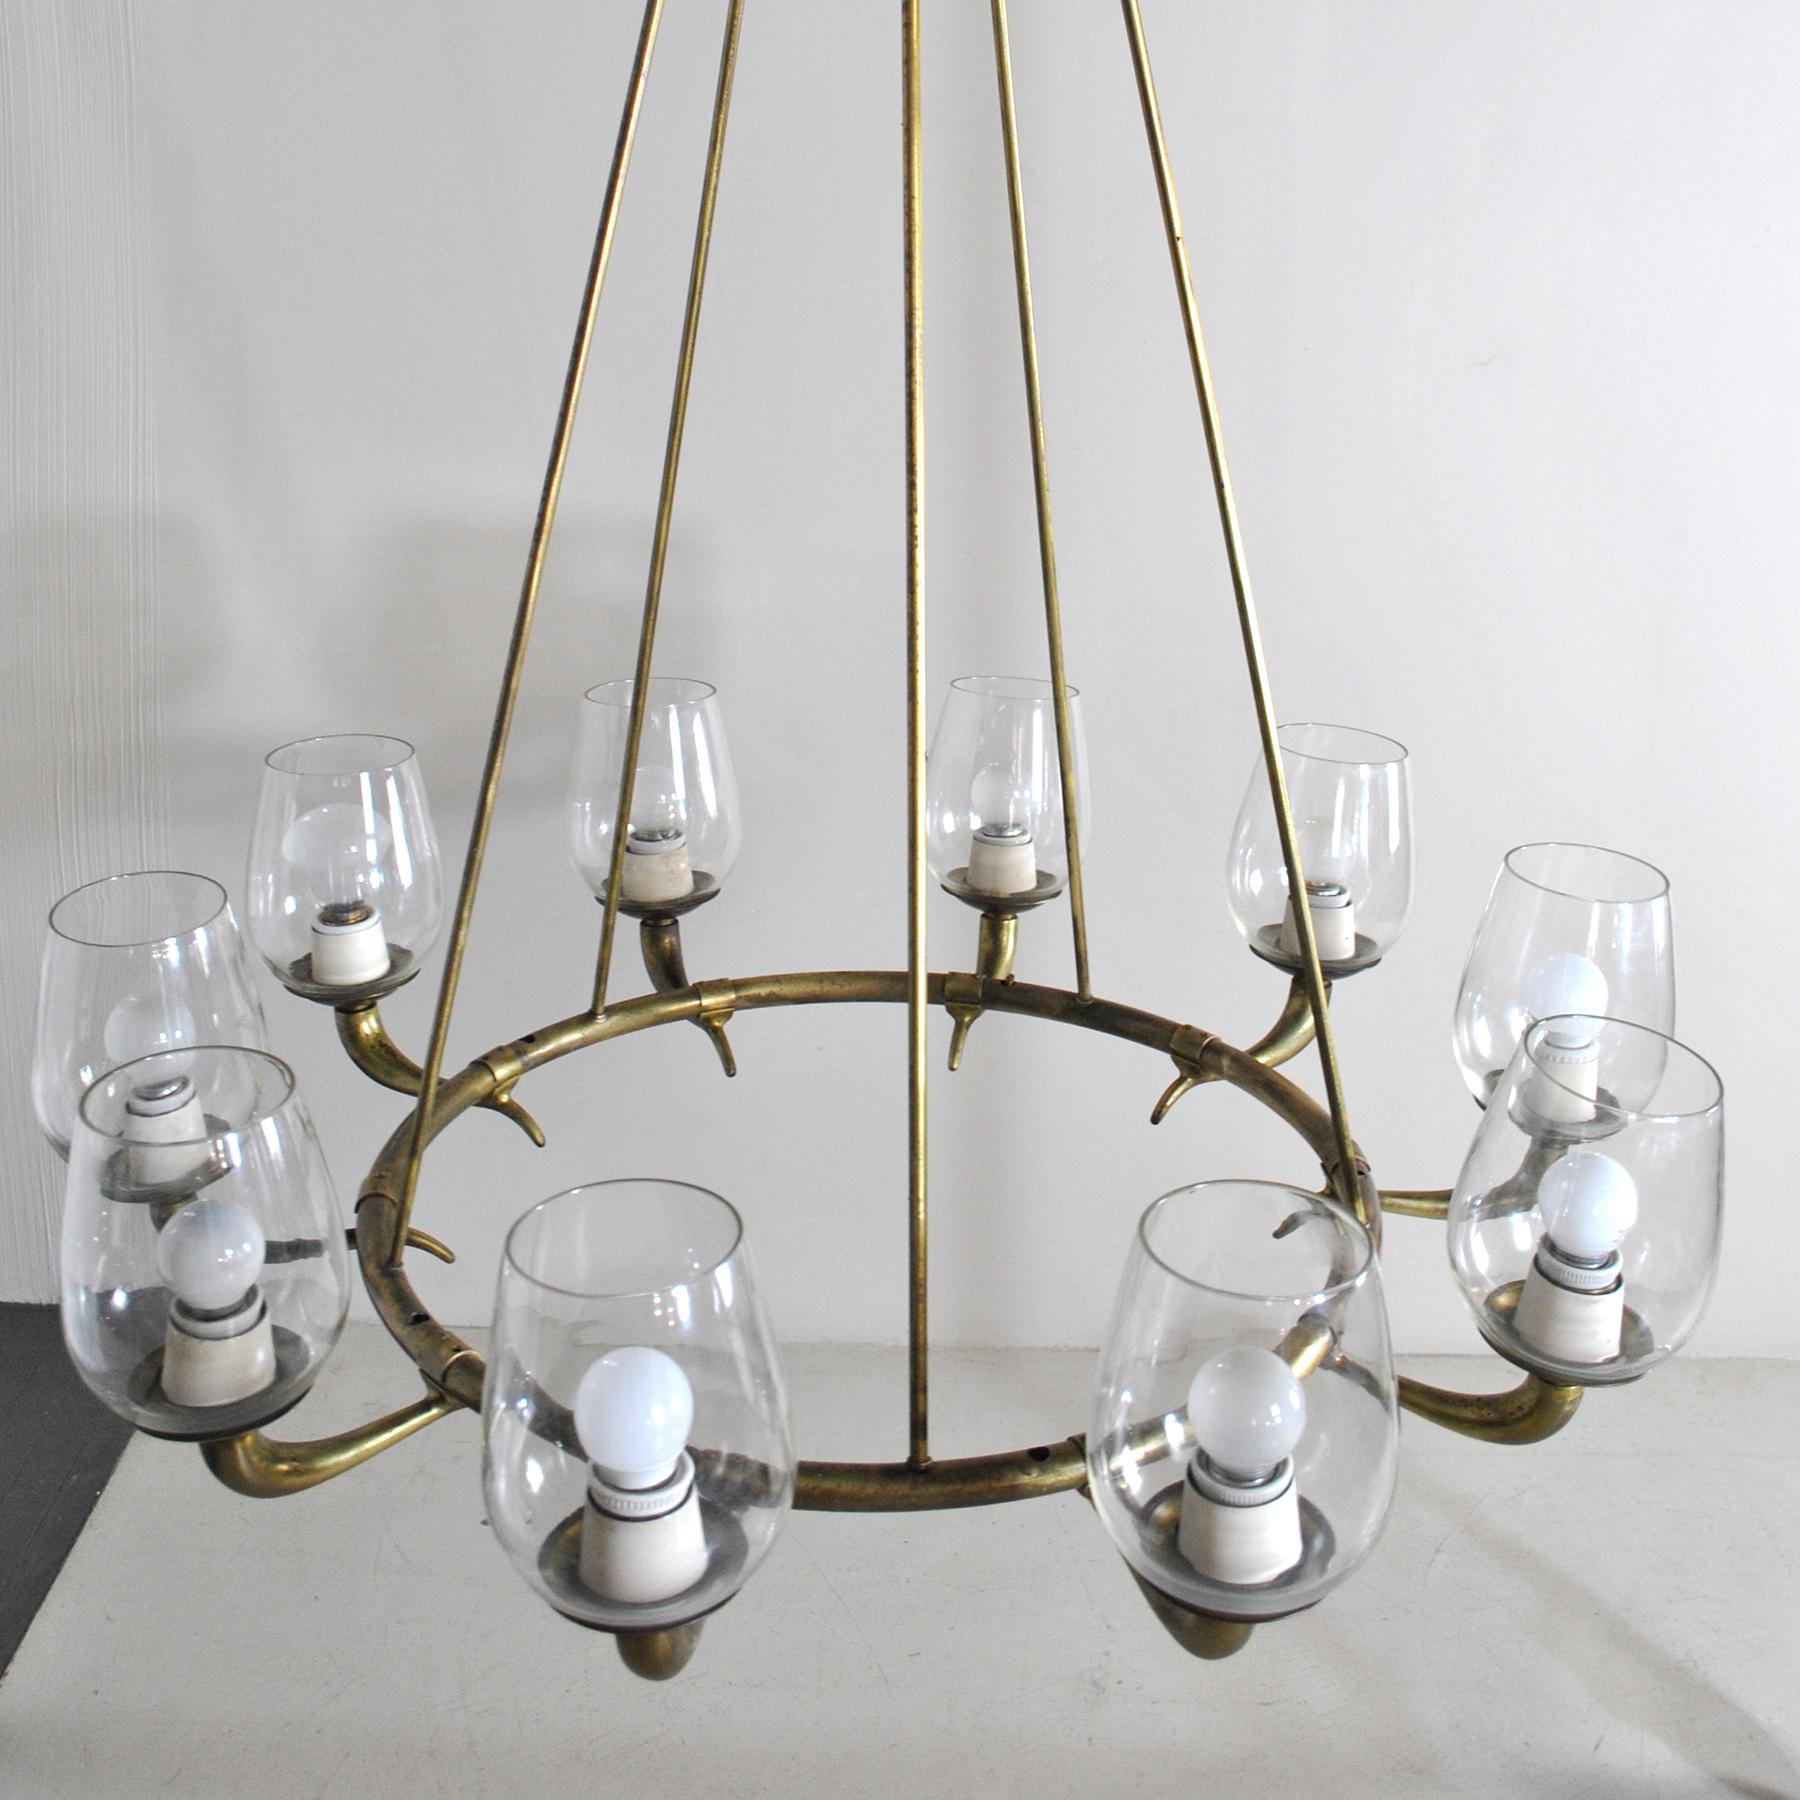 Ten-light suspension chandelier, brass structure, design Emilio Lancia attr. from the late 1940s.